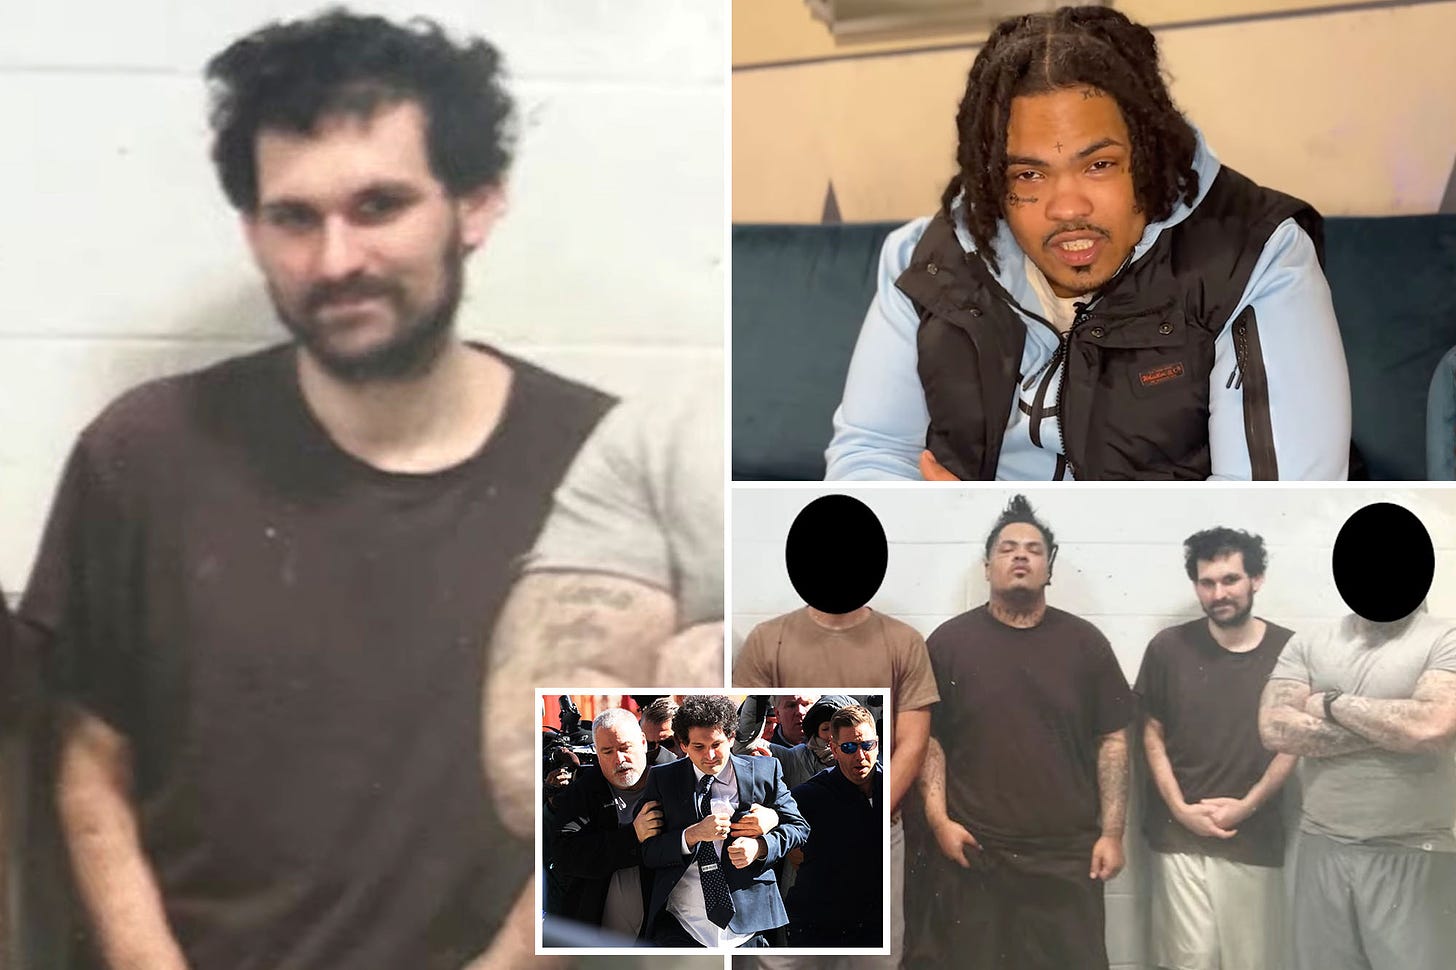 Sam Bankman-Fried pictured in jail, poses alongside ex-gang members